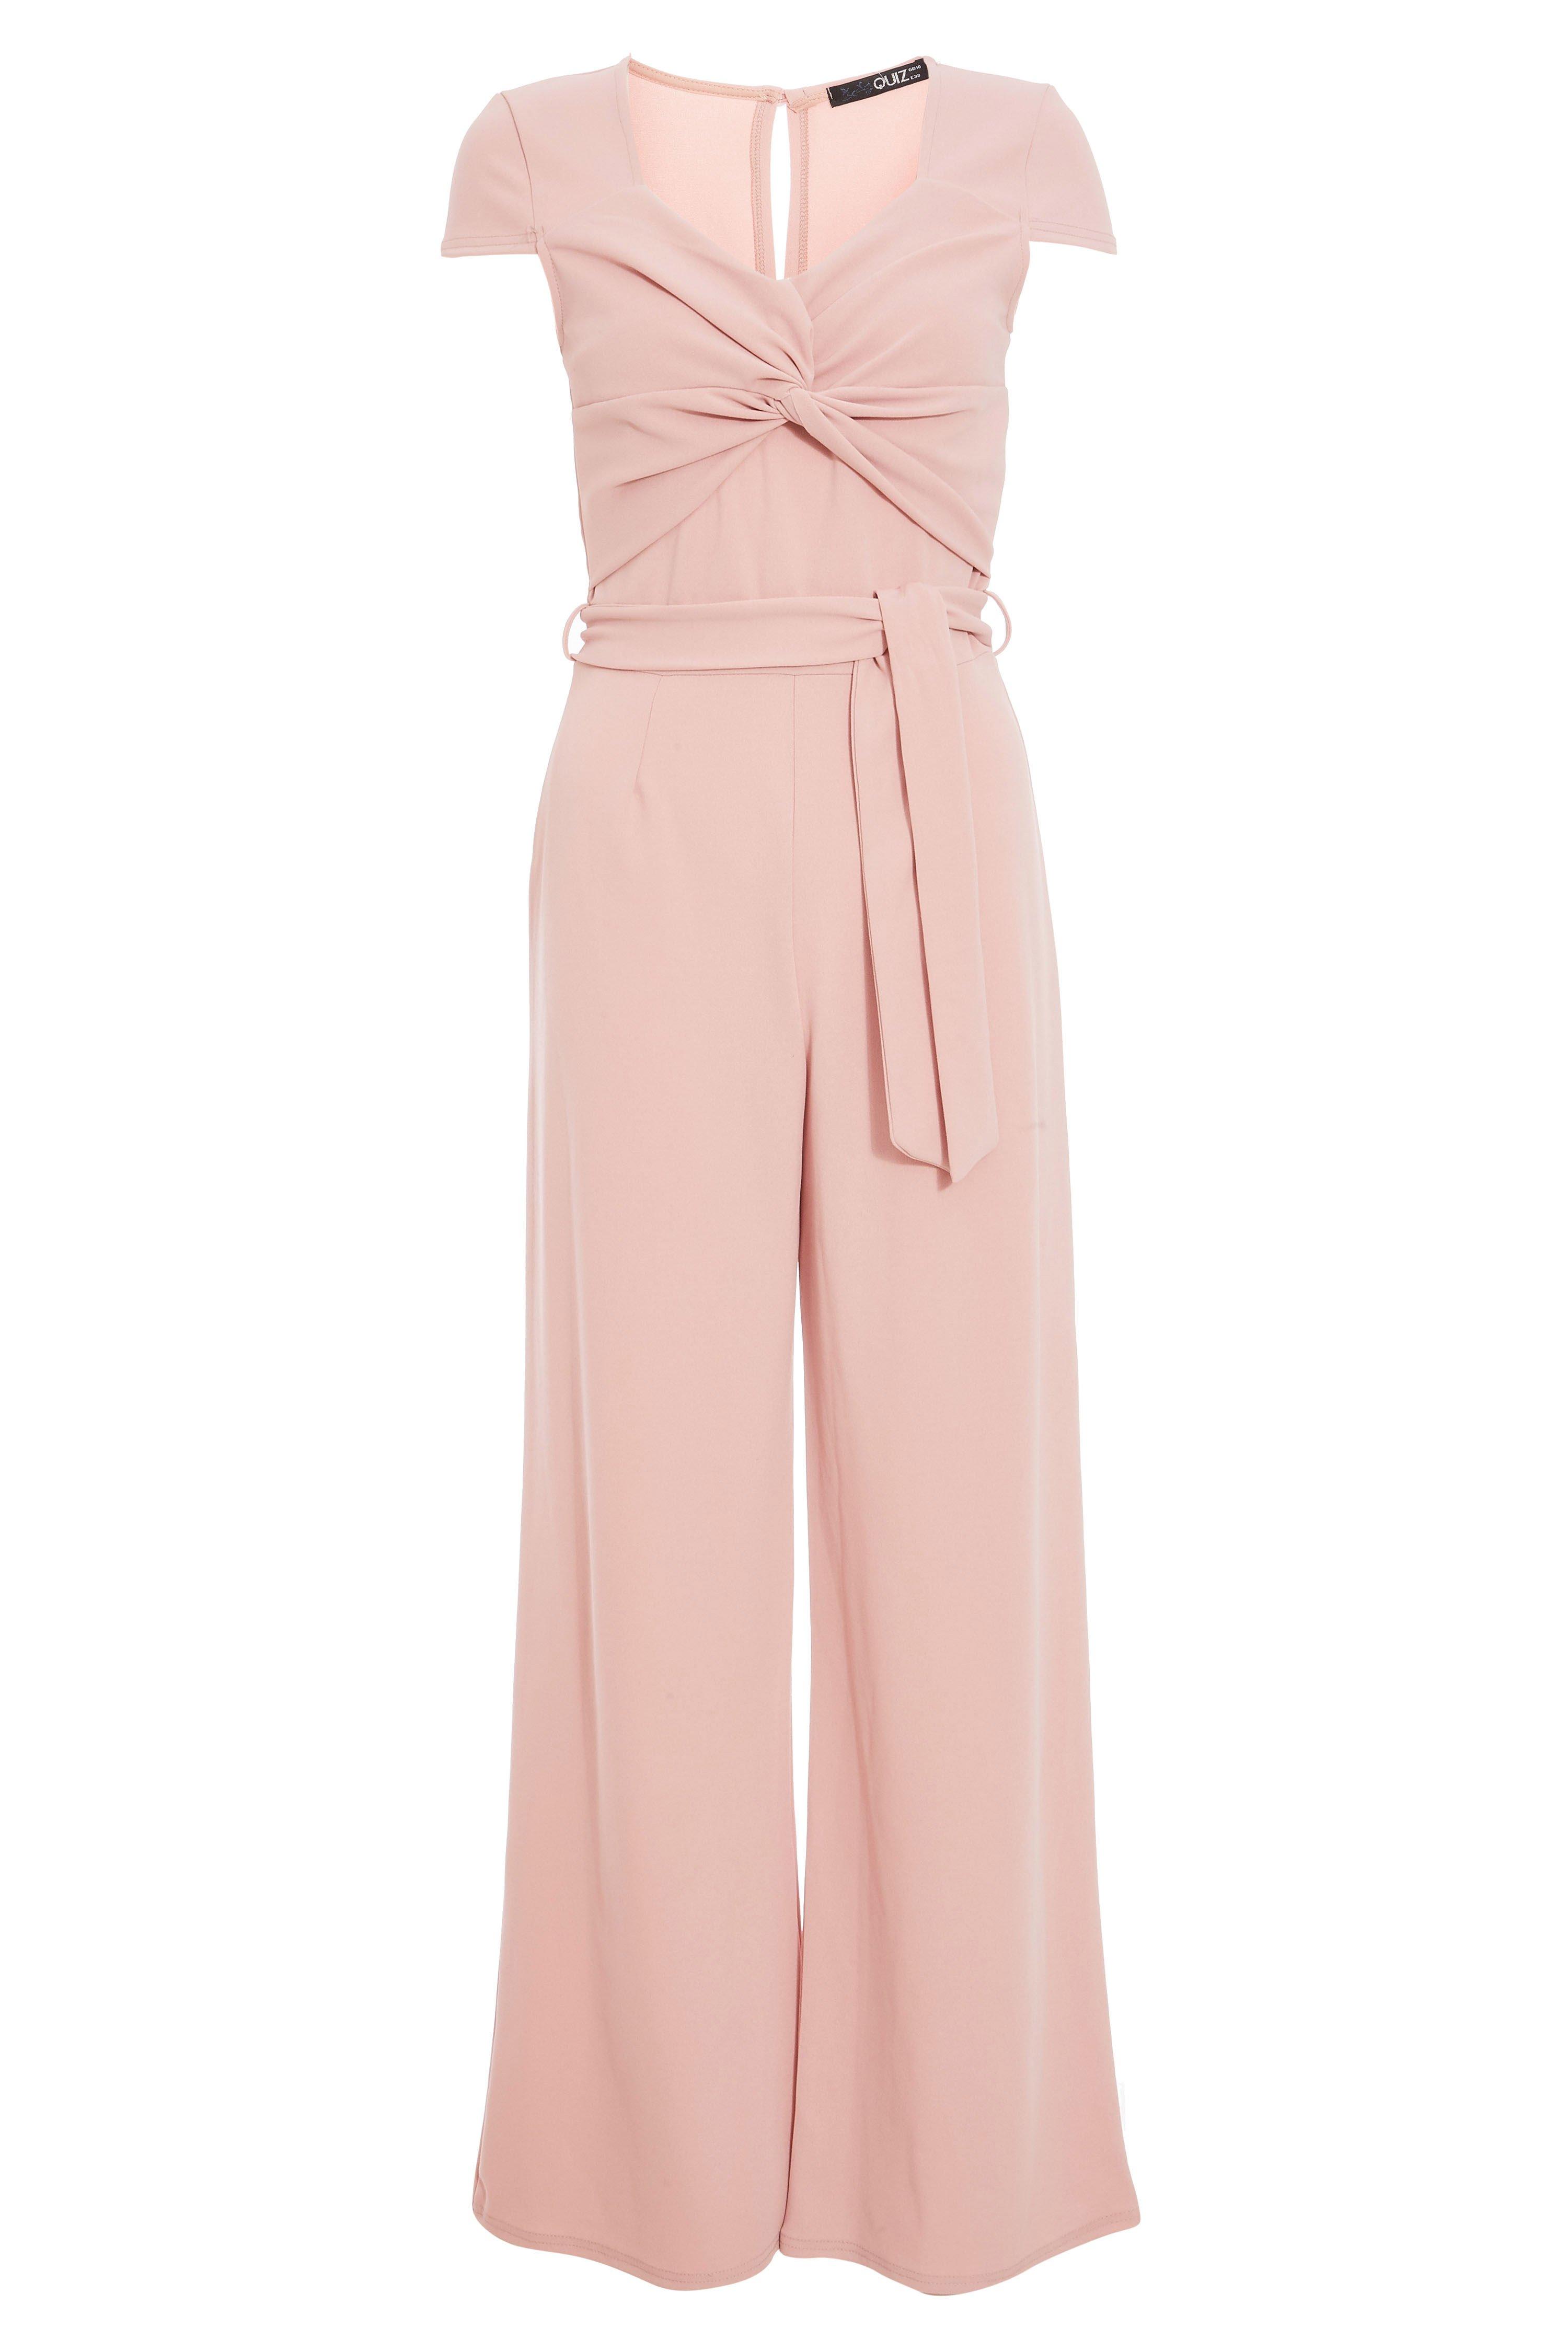 Blush Pink Knot Front Cap Sleeve Jumpsuit - Quiz Clothing